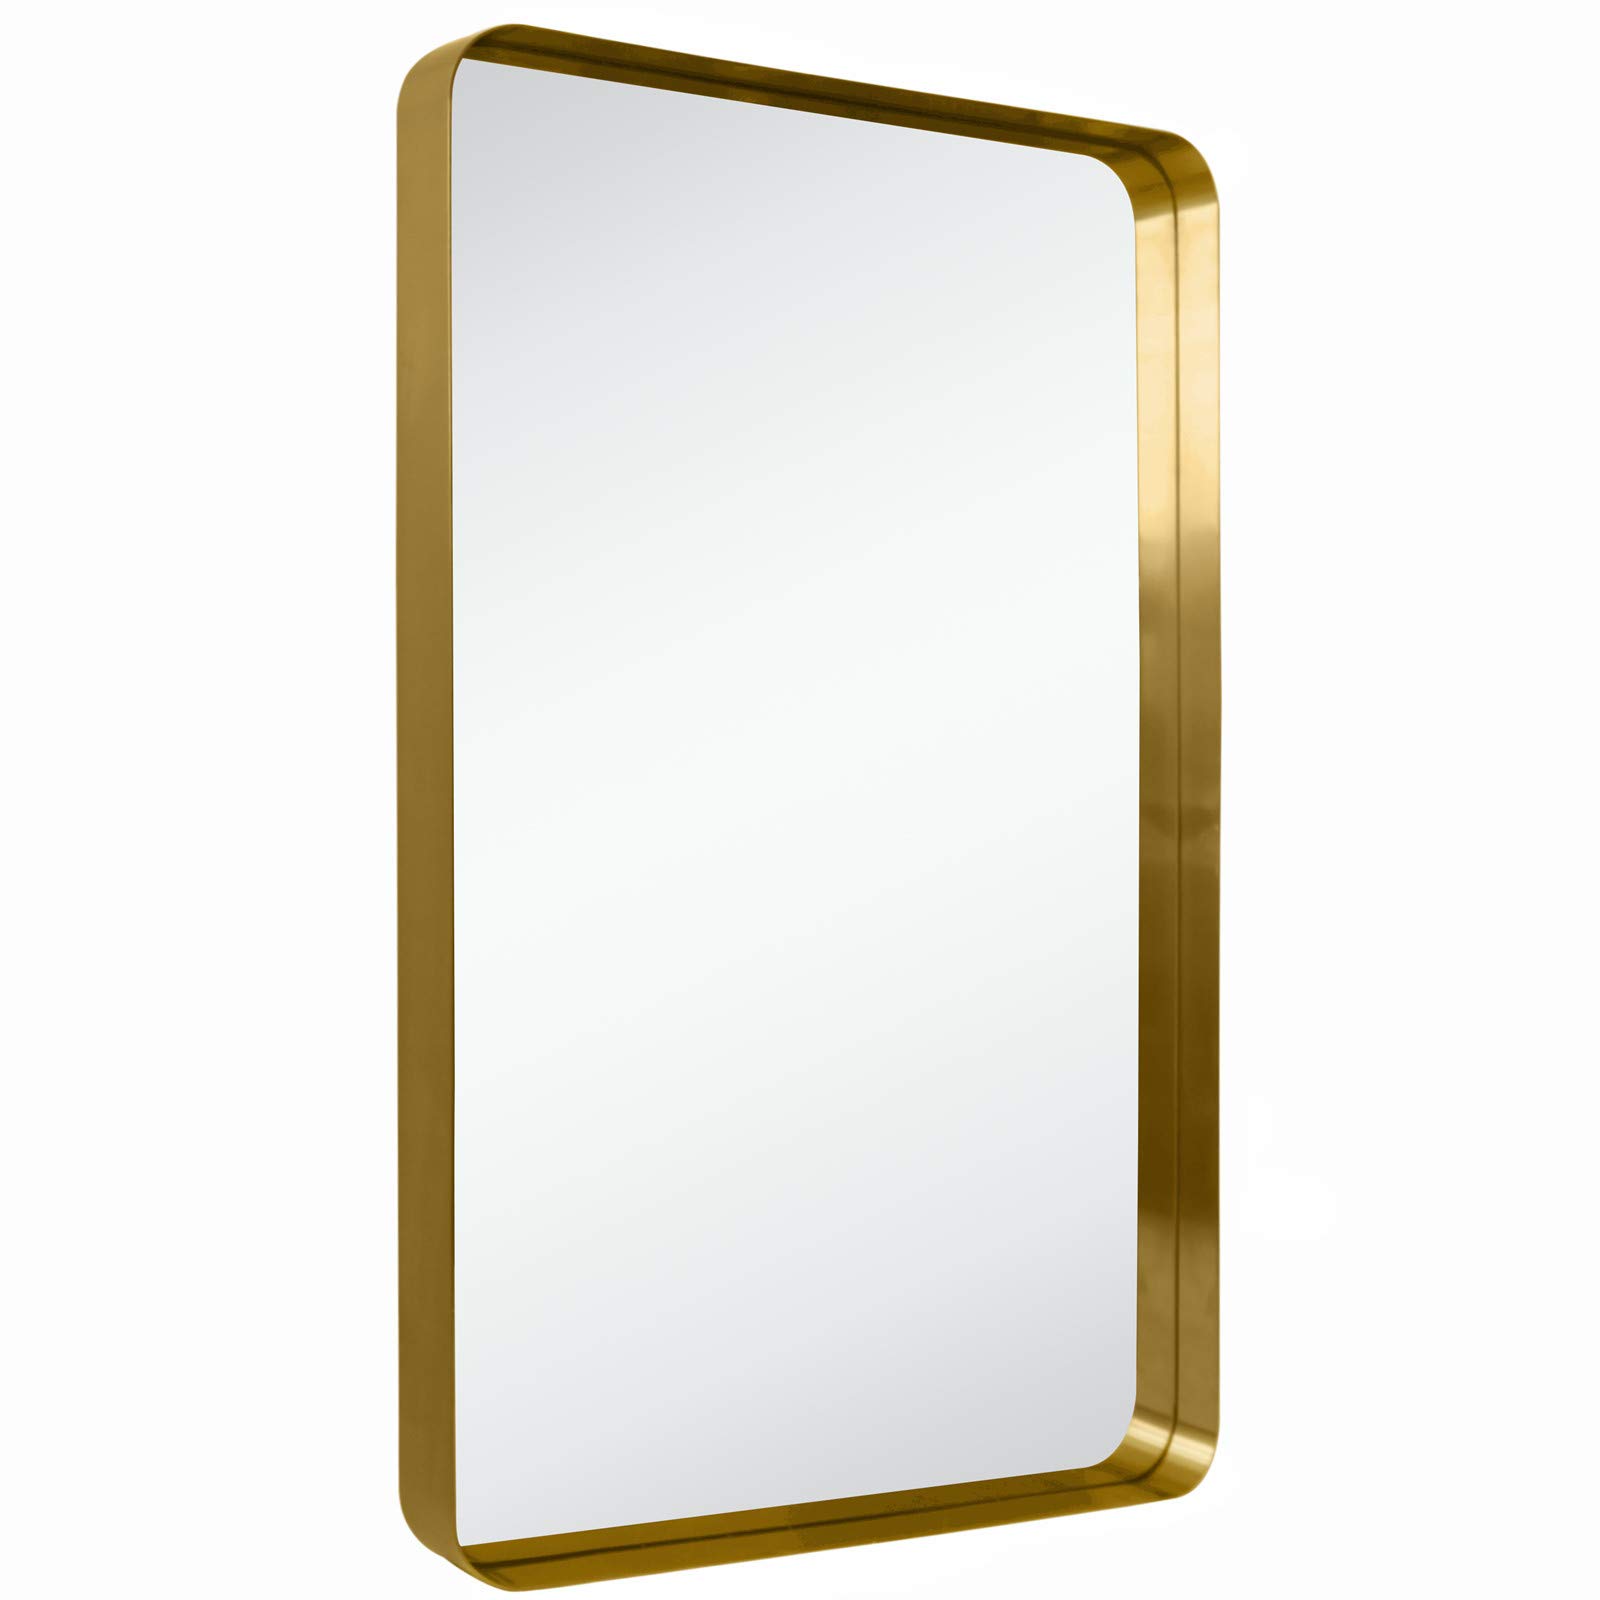 Arthers Stainless Steel Metal Bathroom Vanity Wall Mirror-20x30-Brushed Gold